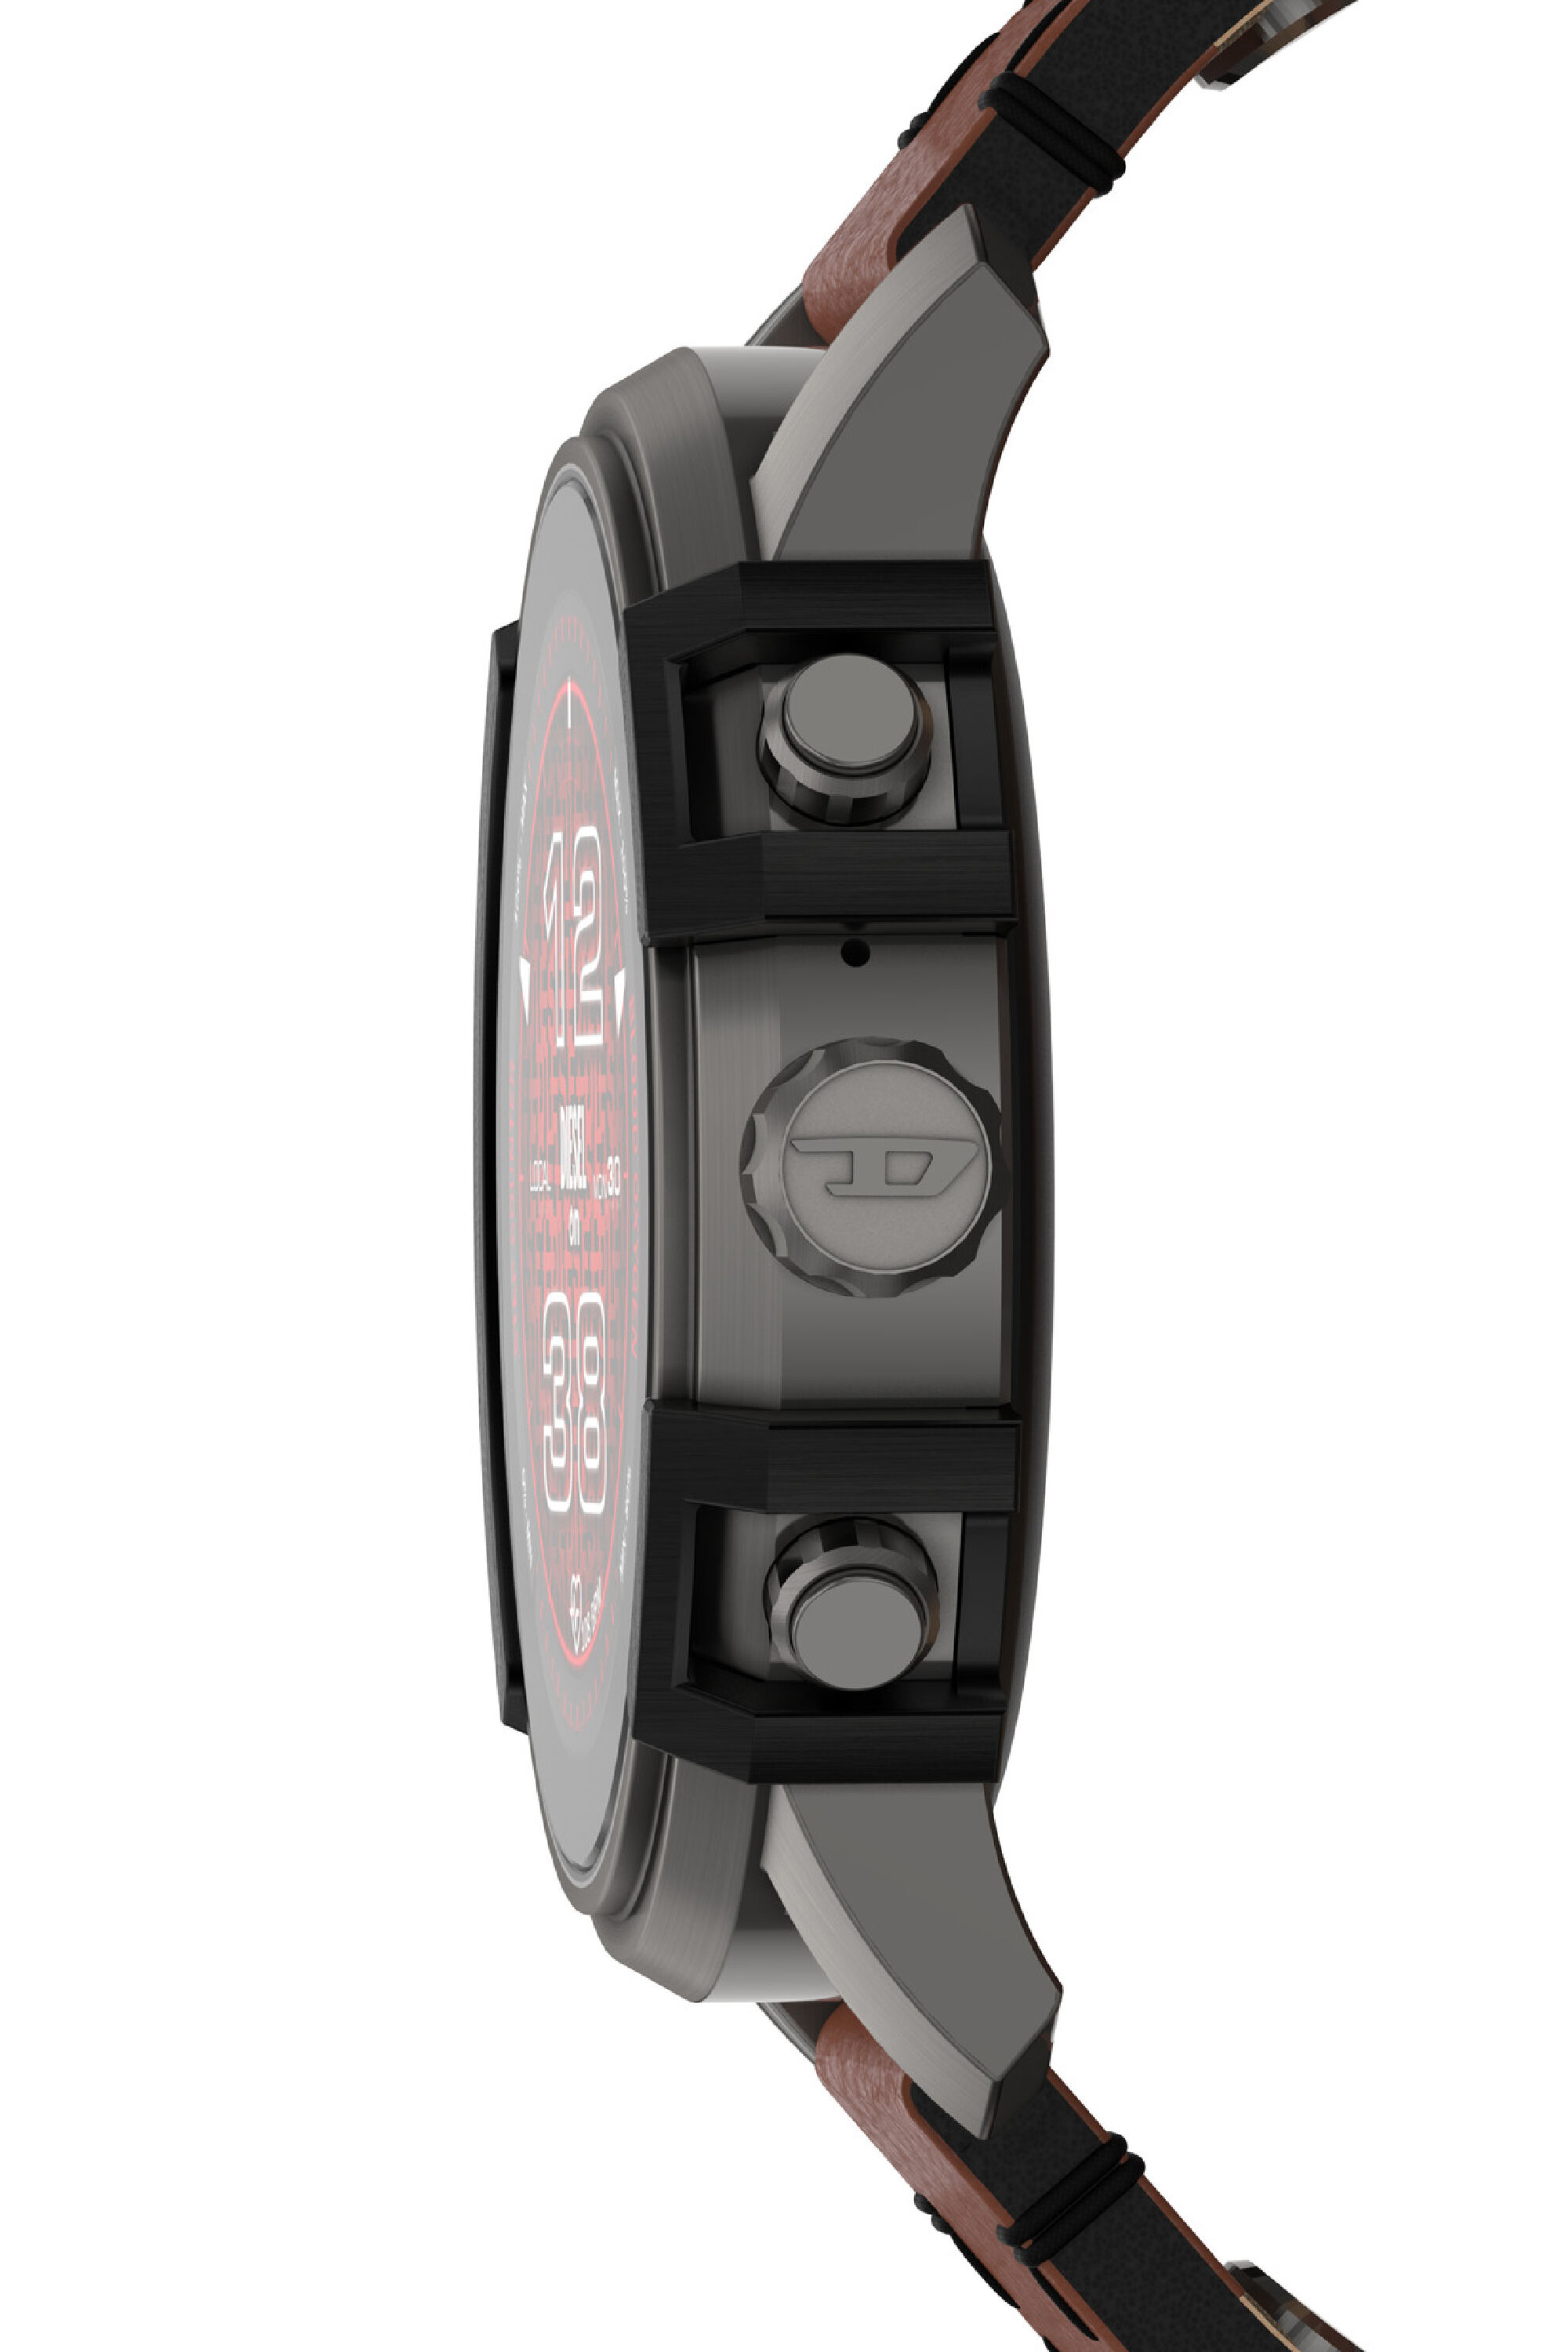 Men's Griffed leather smartwatch | DZT2043 Diesel